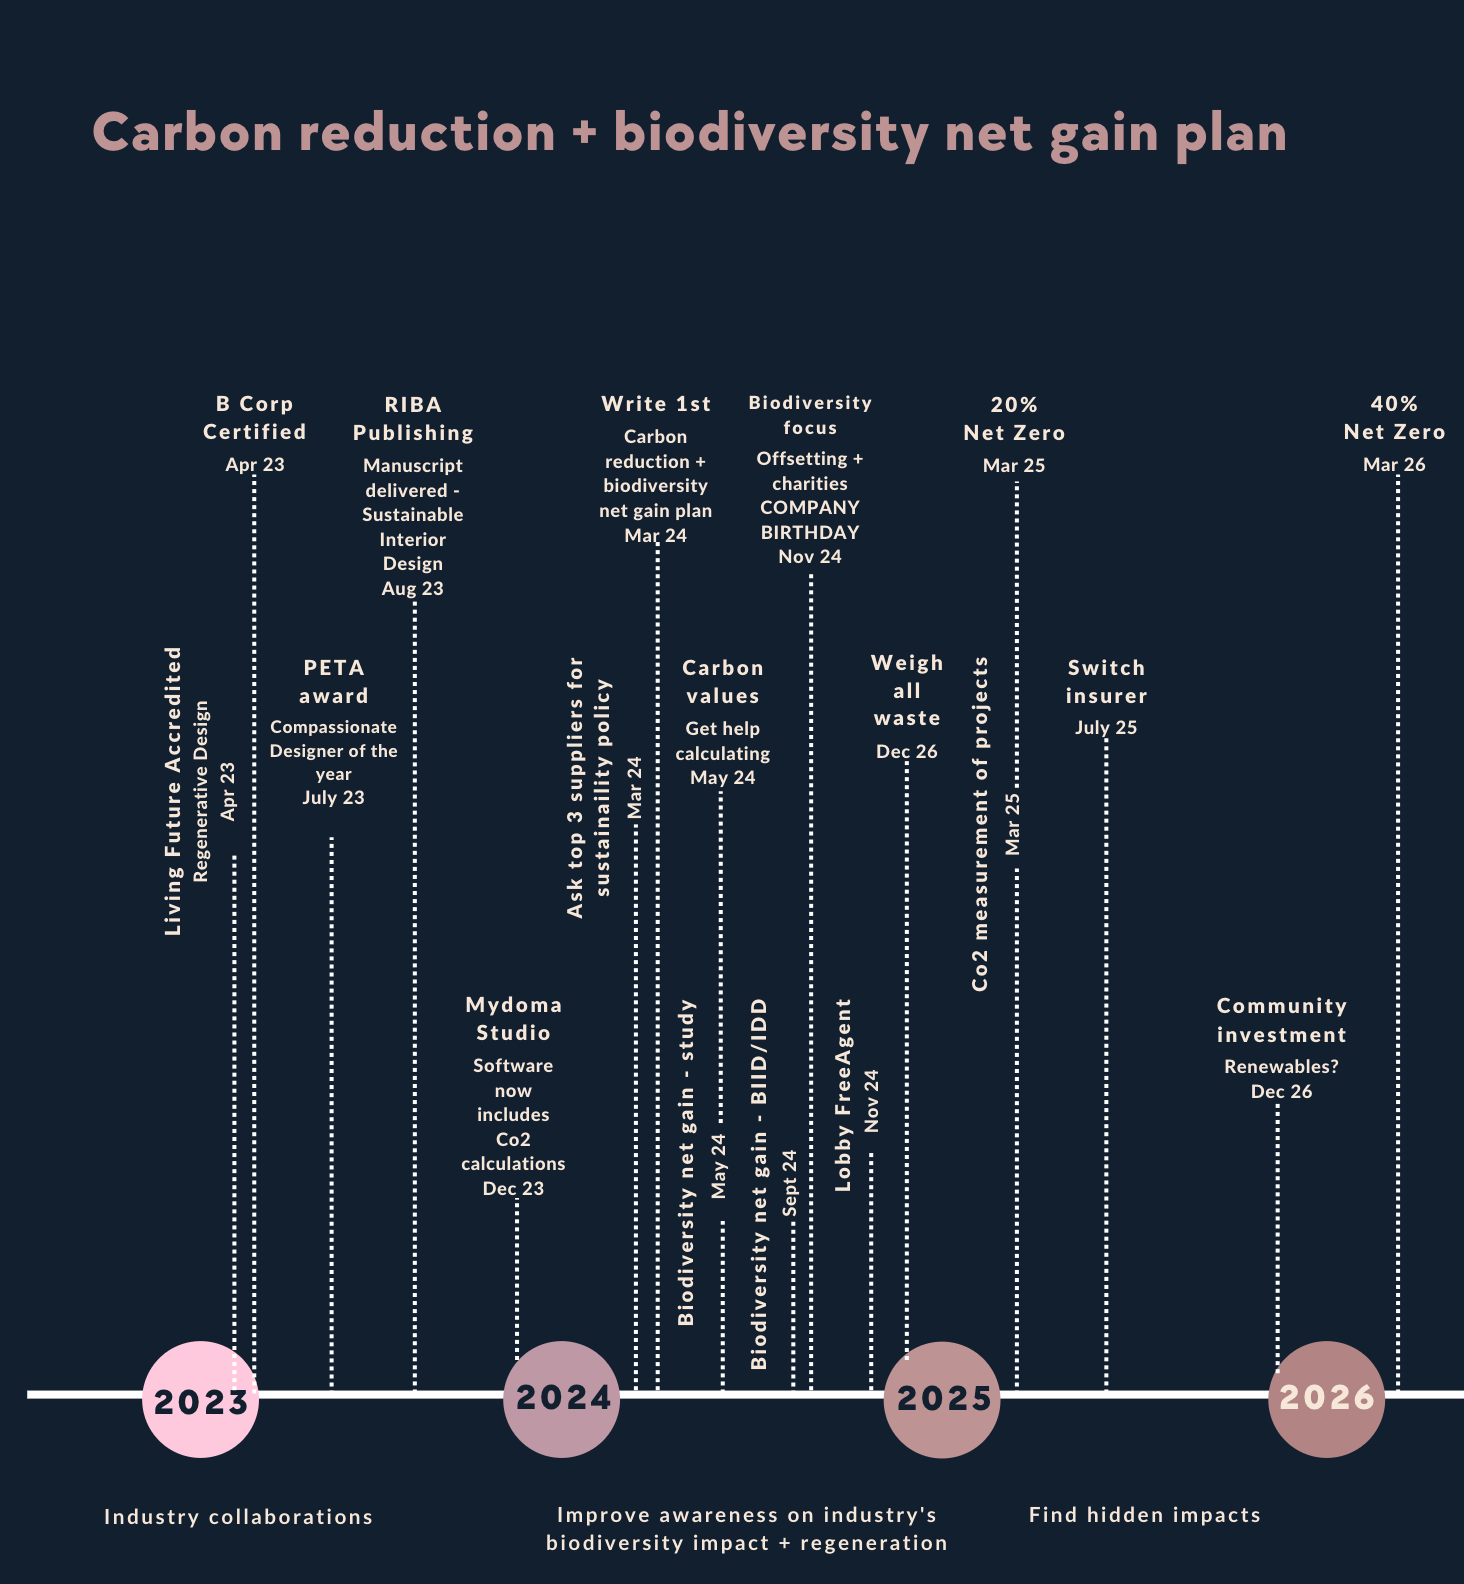 Carbon reduction + biodiversity net gain plan